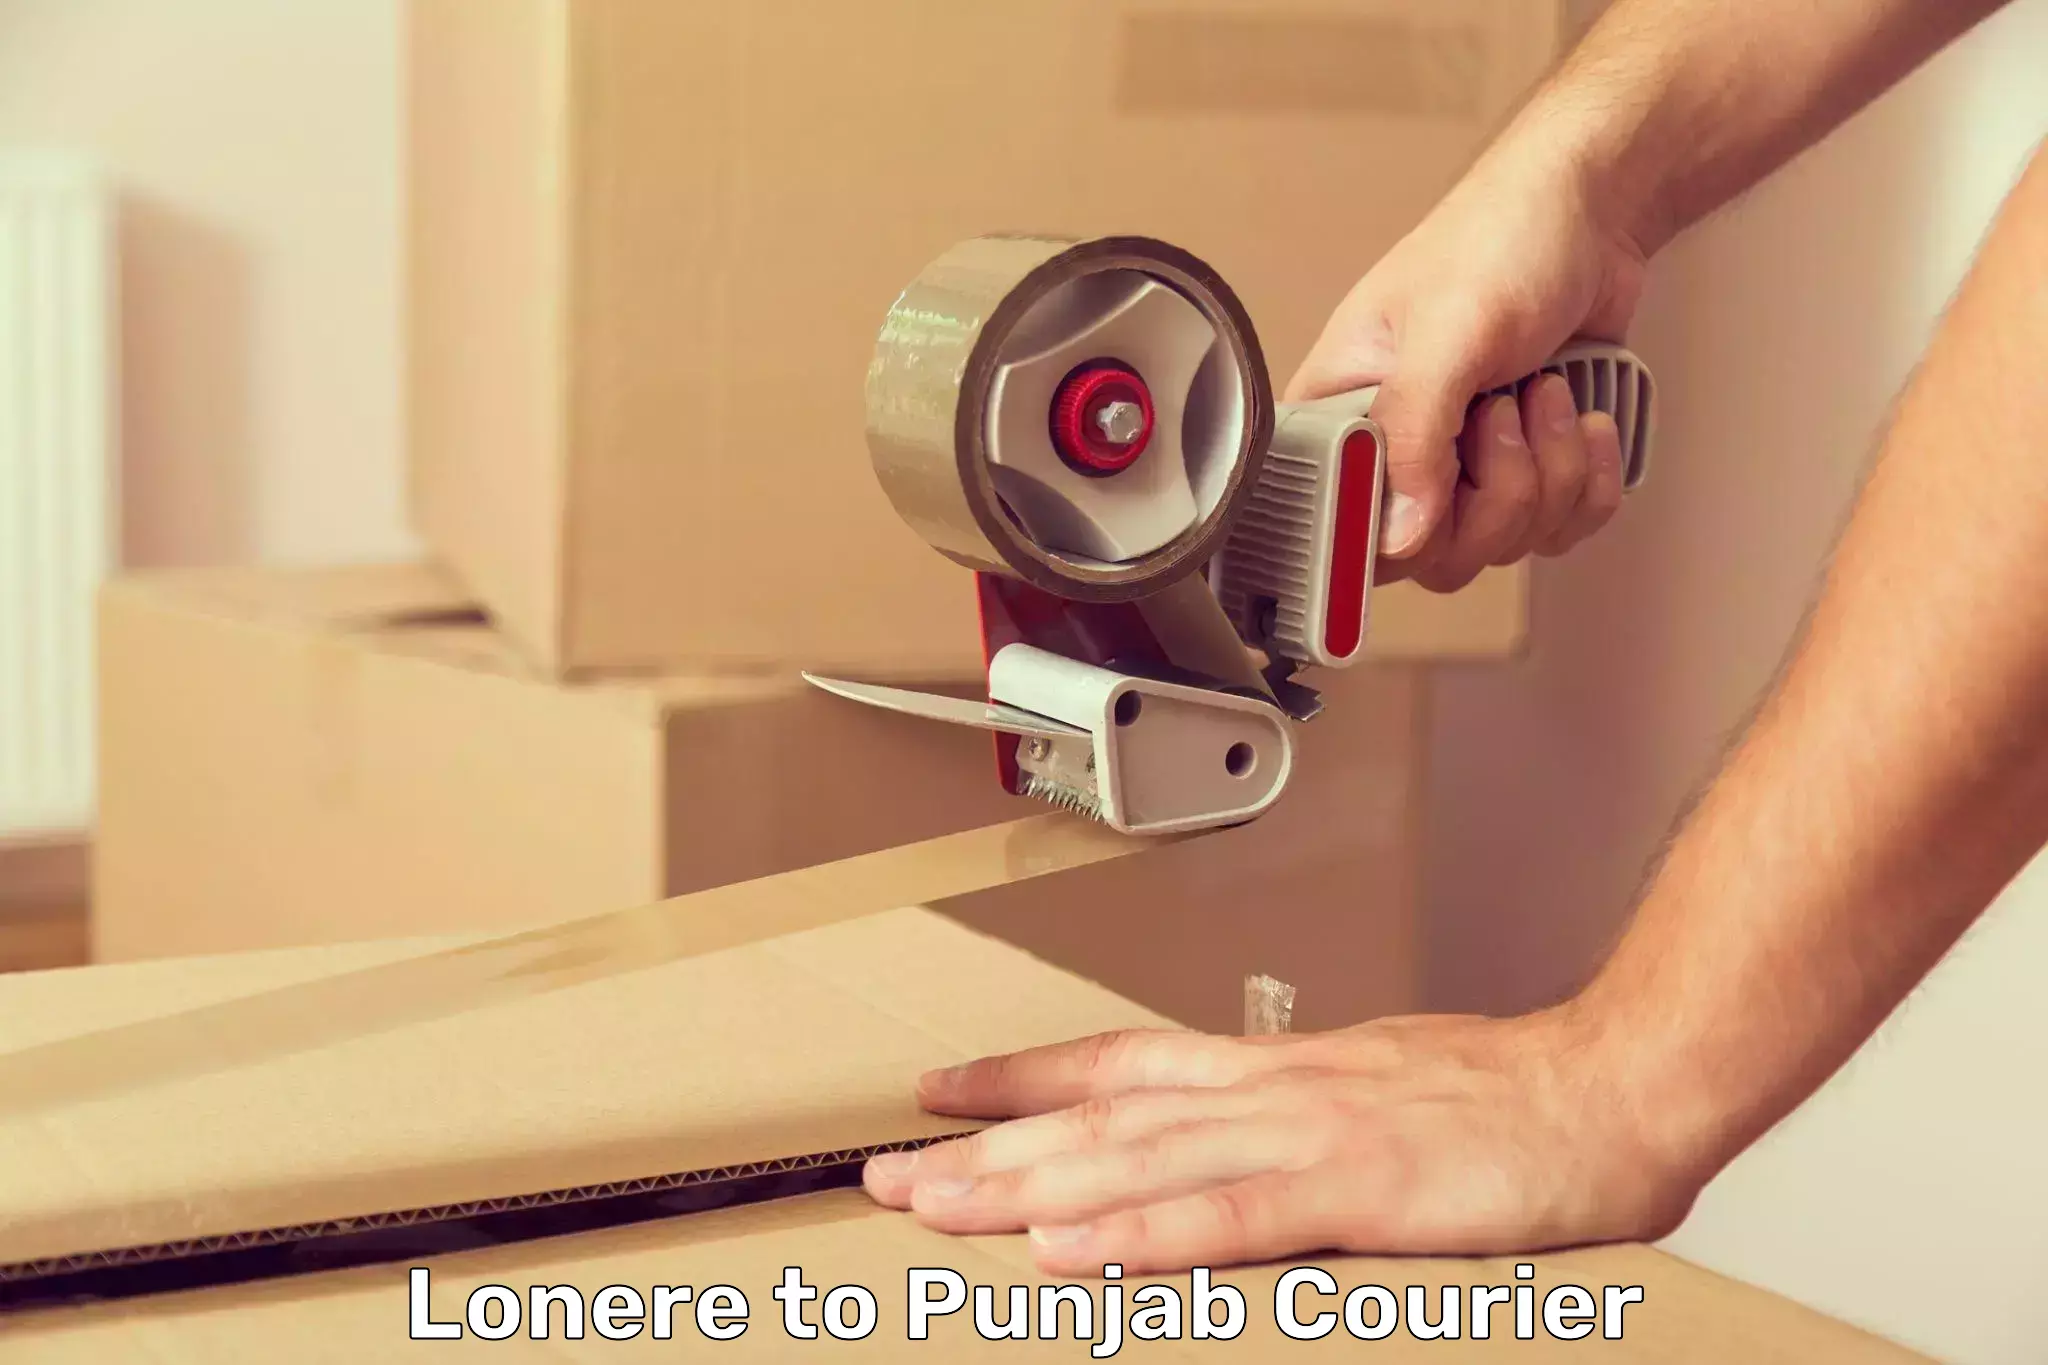 Courier service comparison Lonere to Amritsar